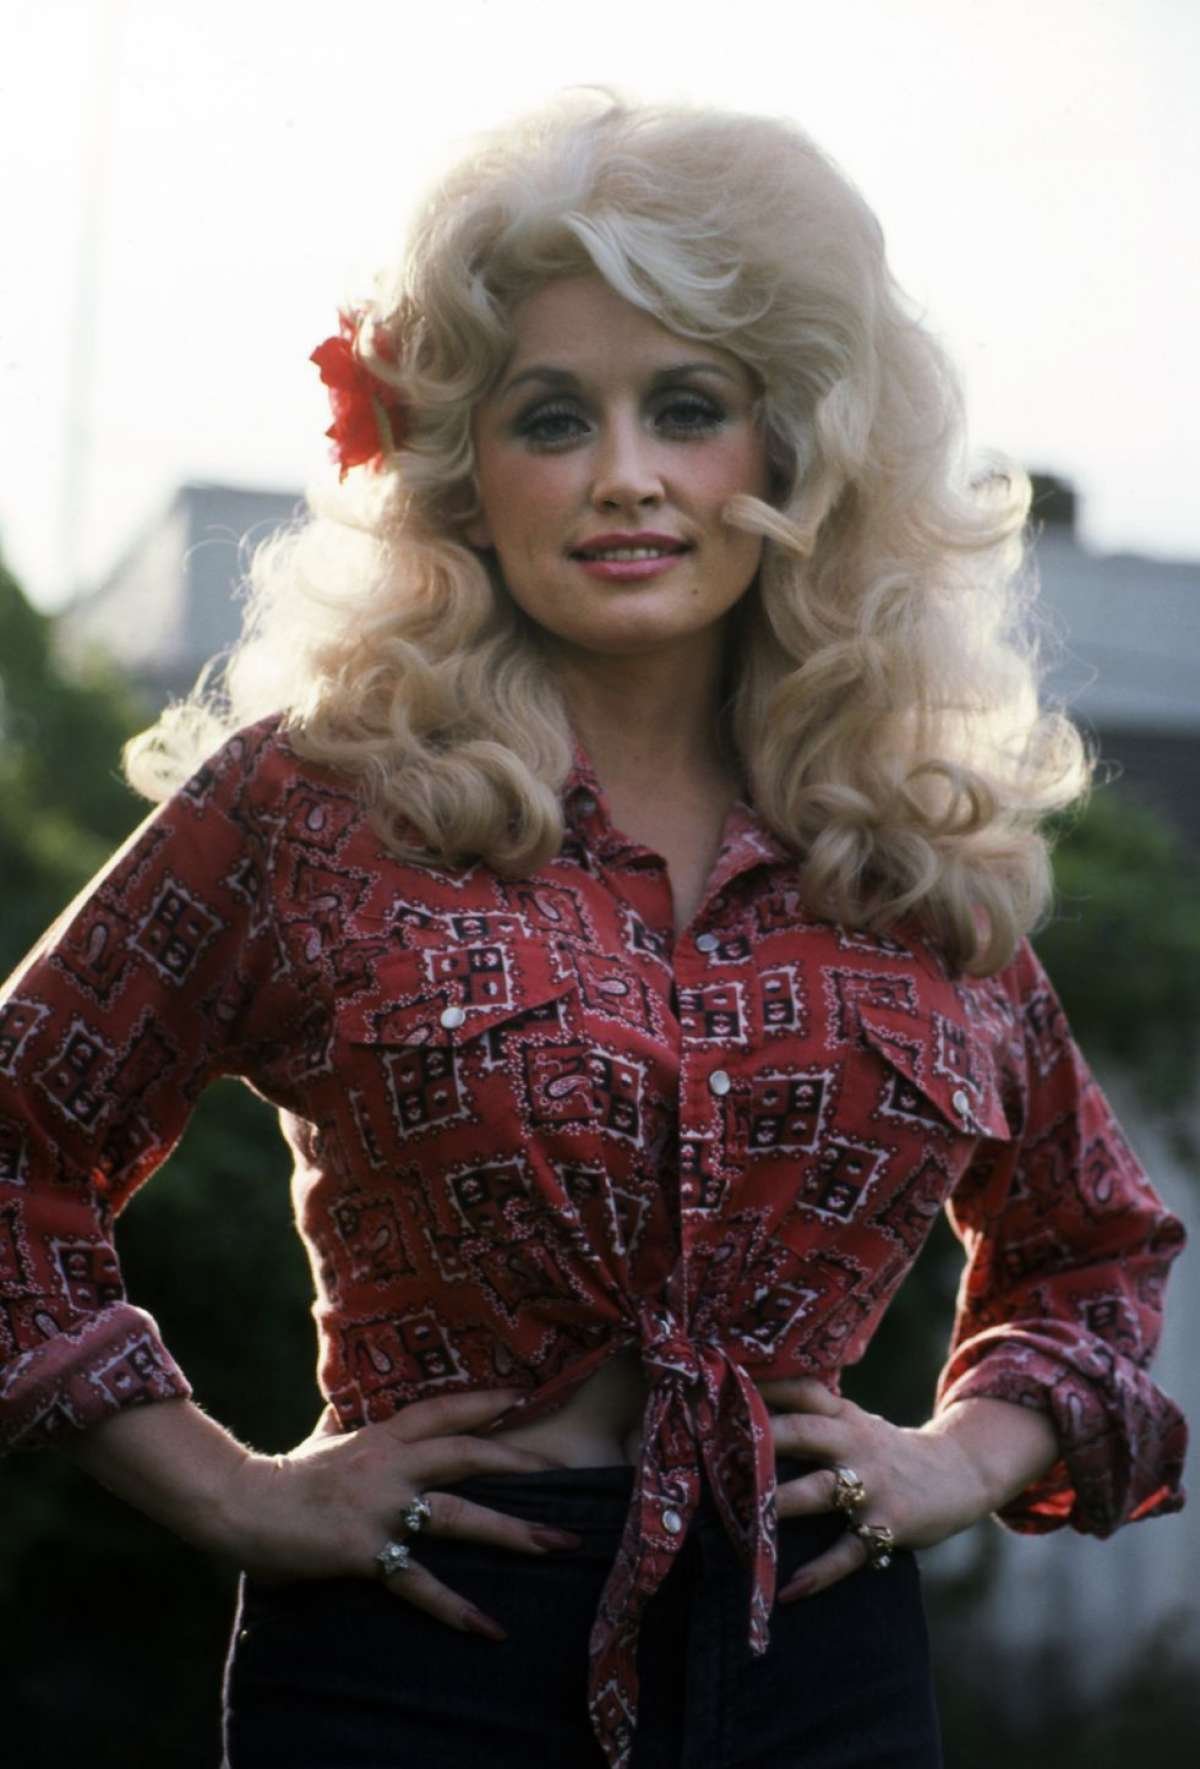 The Dolly Parton Look Alike Contest Cherry Grove Fire Island